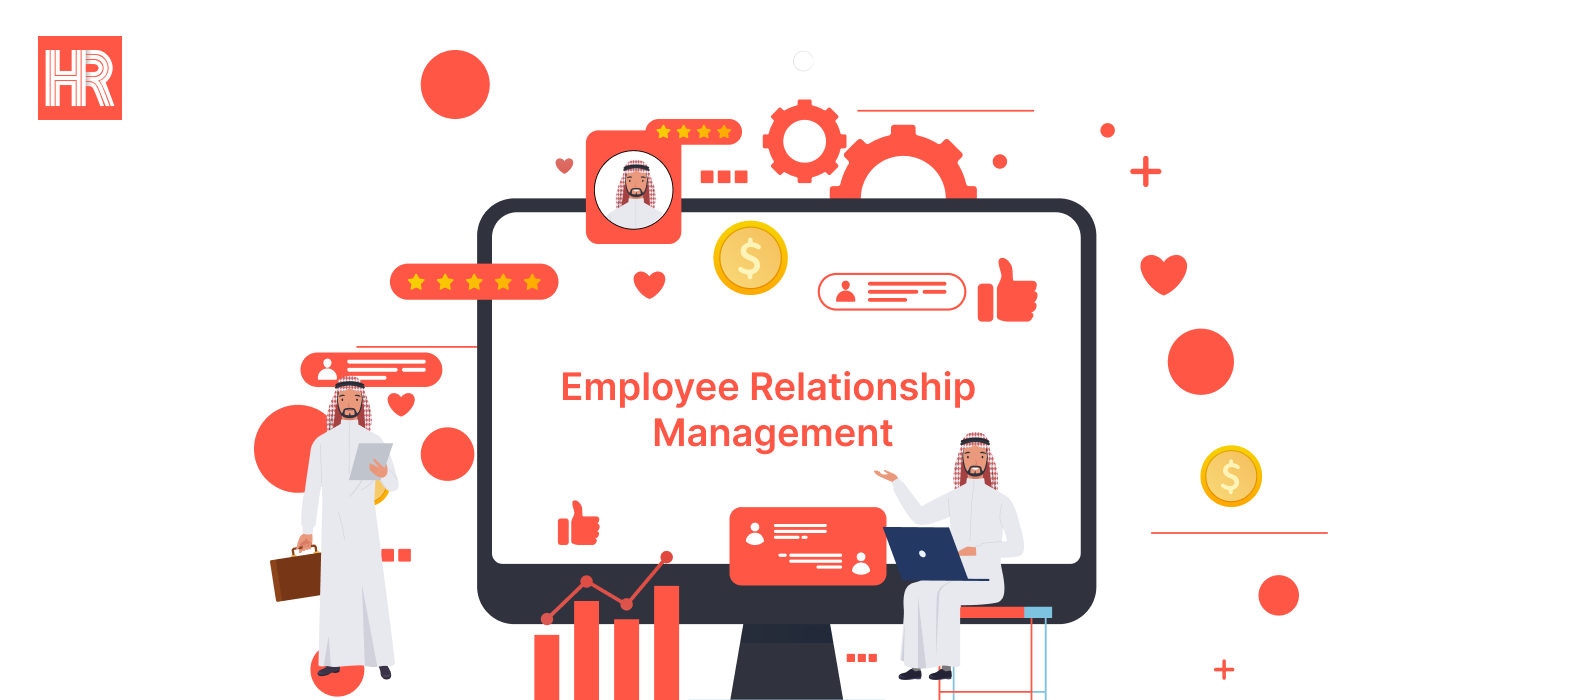 Top 5 Benefits of Employee Relations Management Software